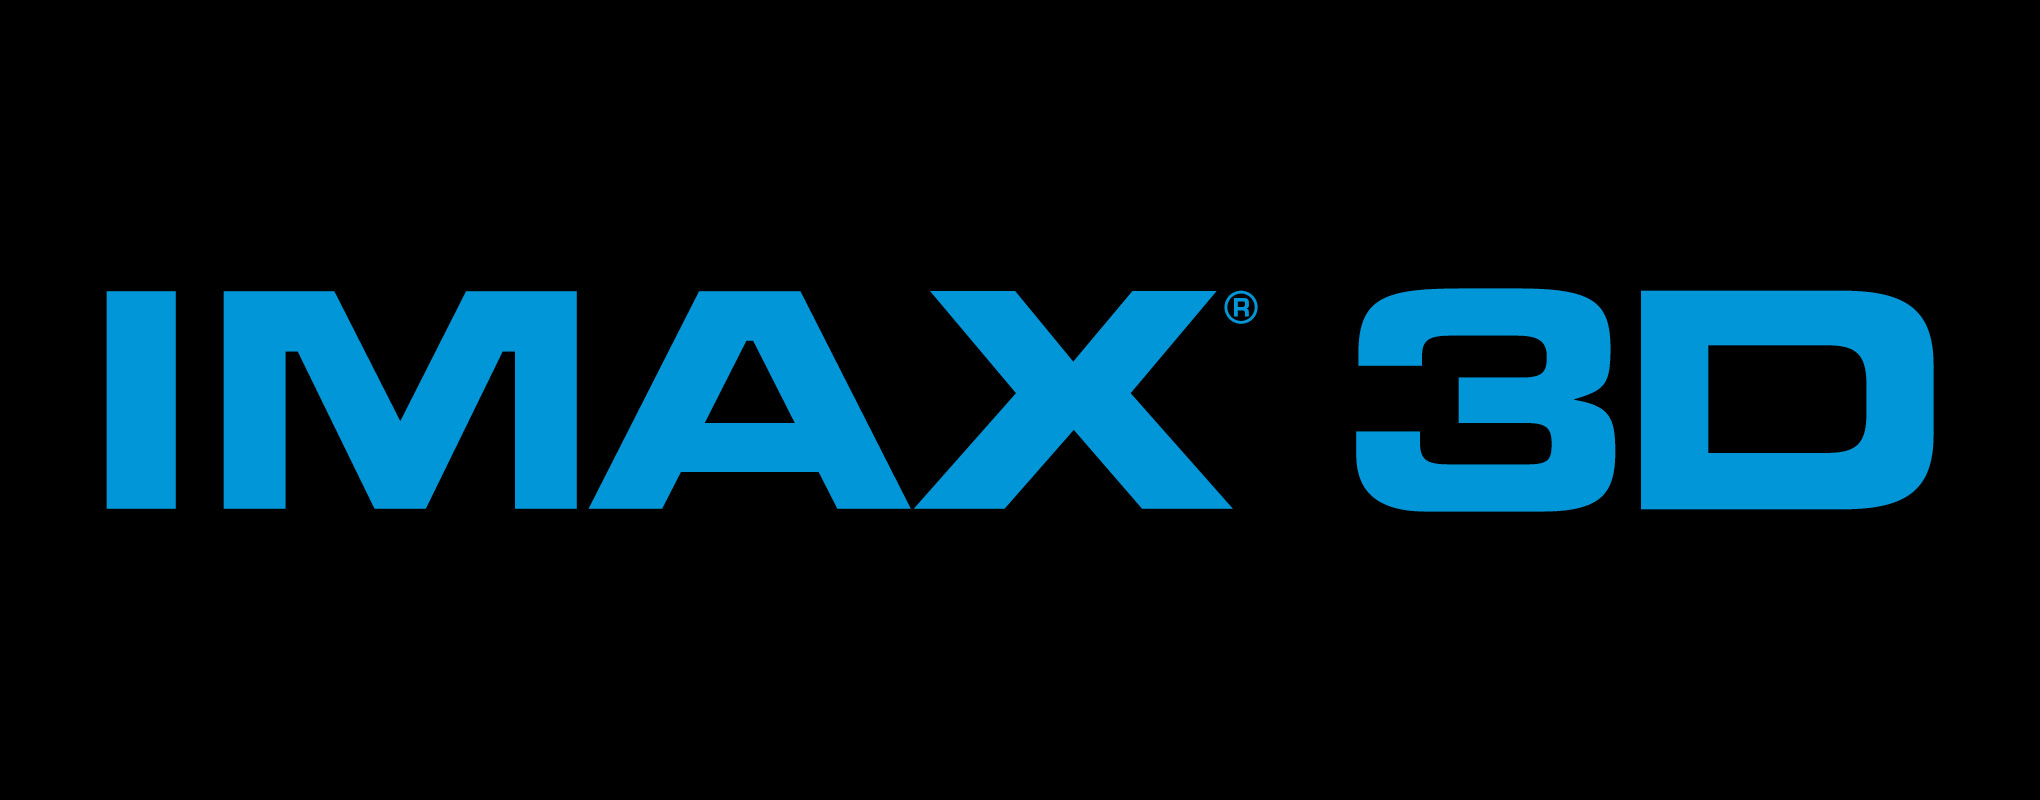 Imax 3D Logo logo.